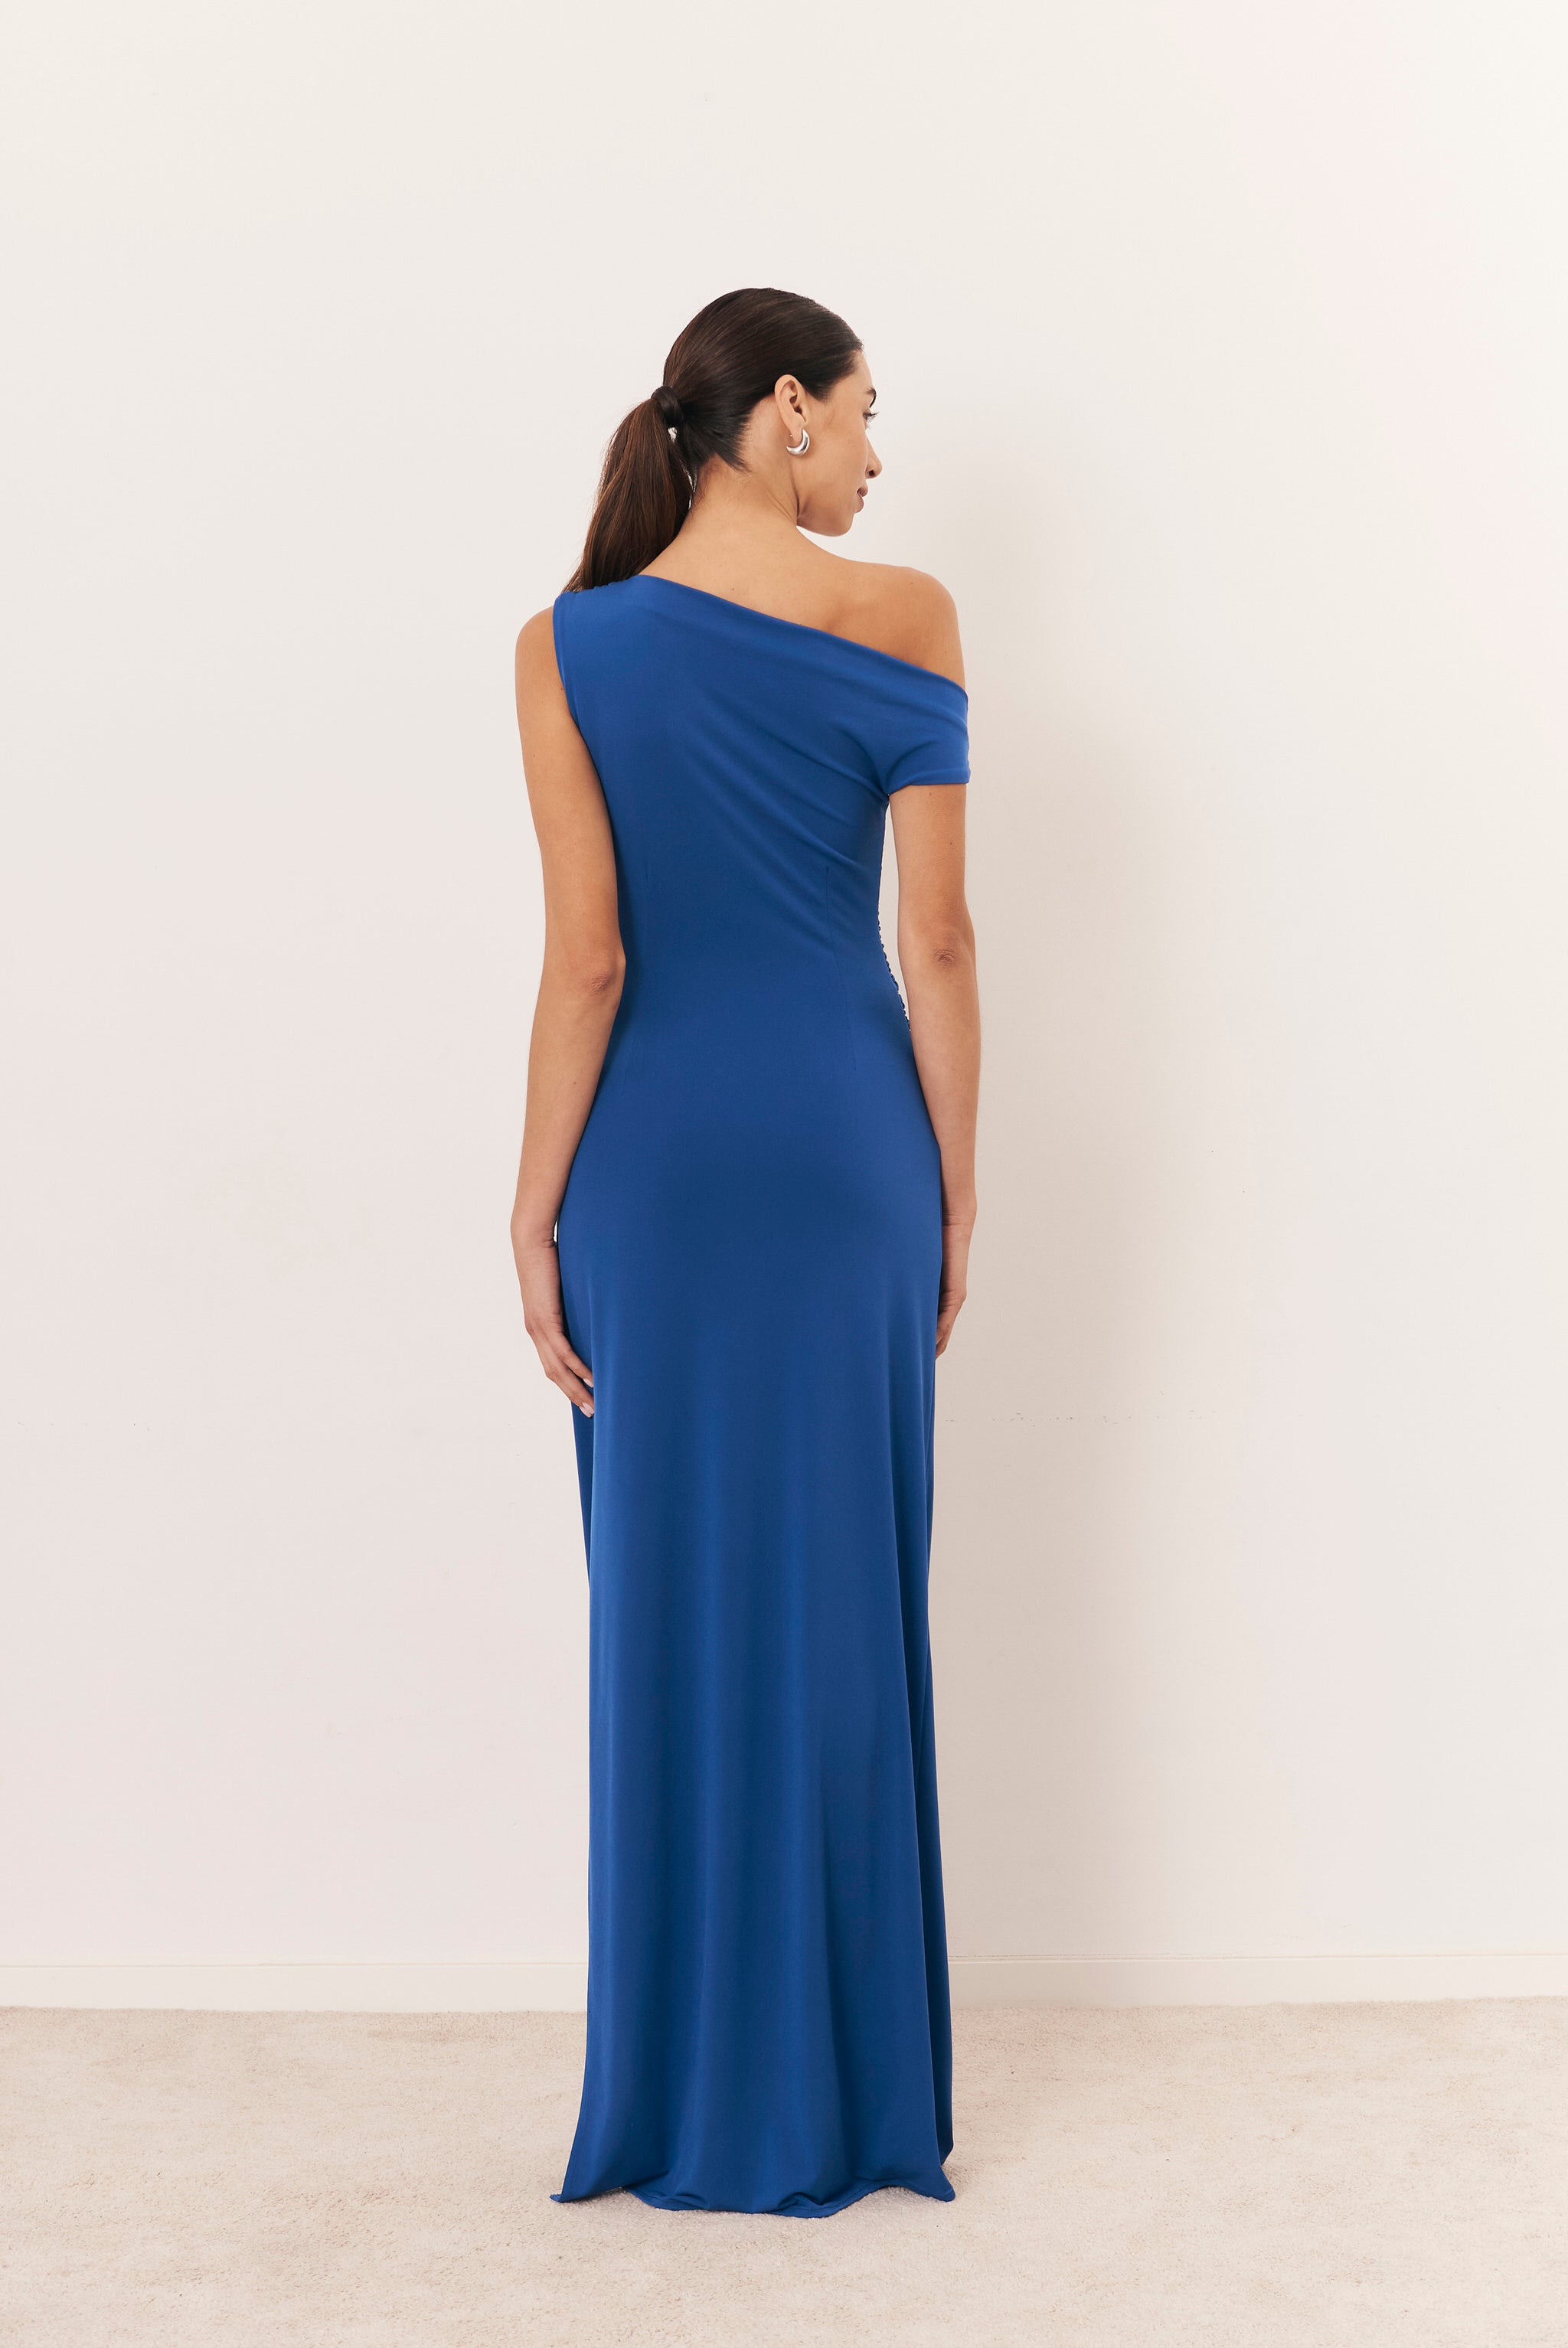 Cobalt blue Kos dress